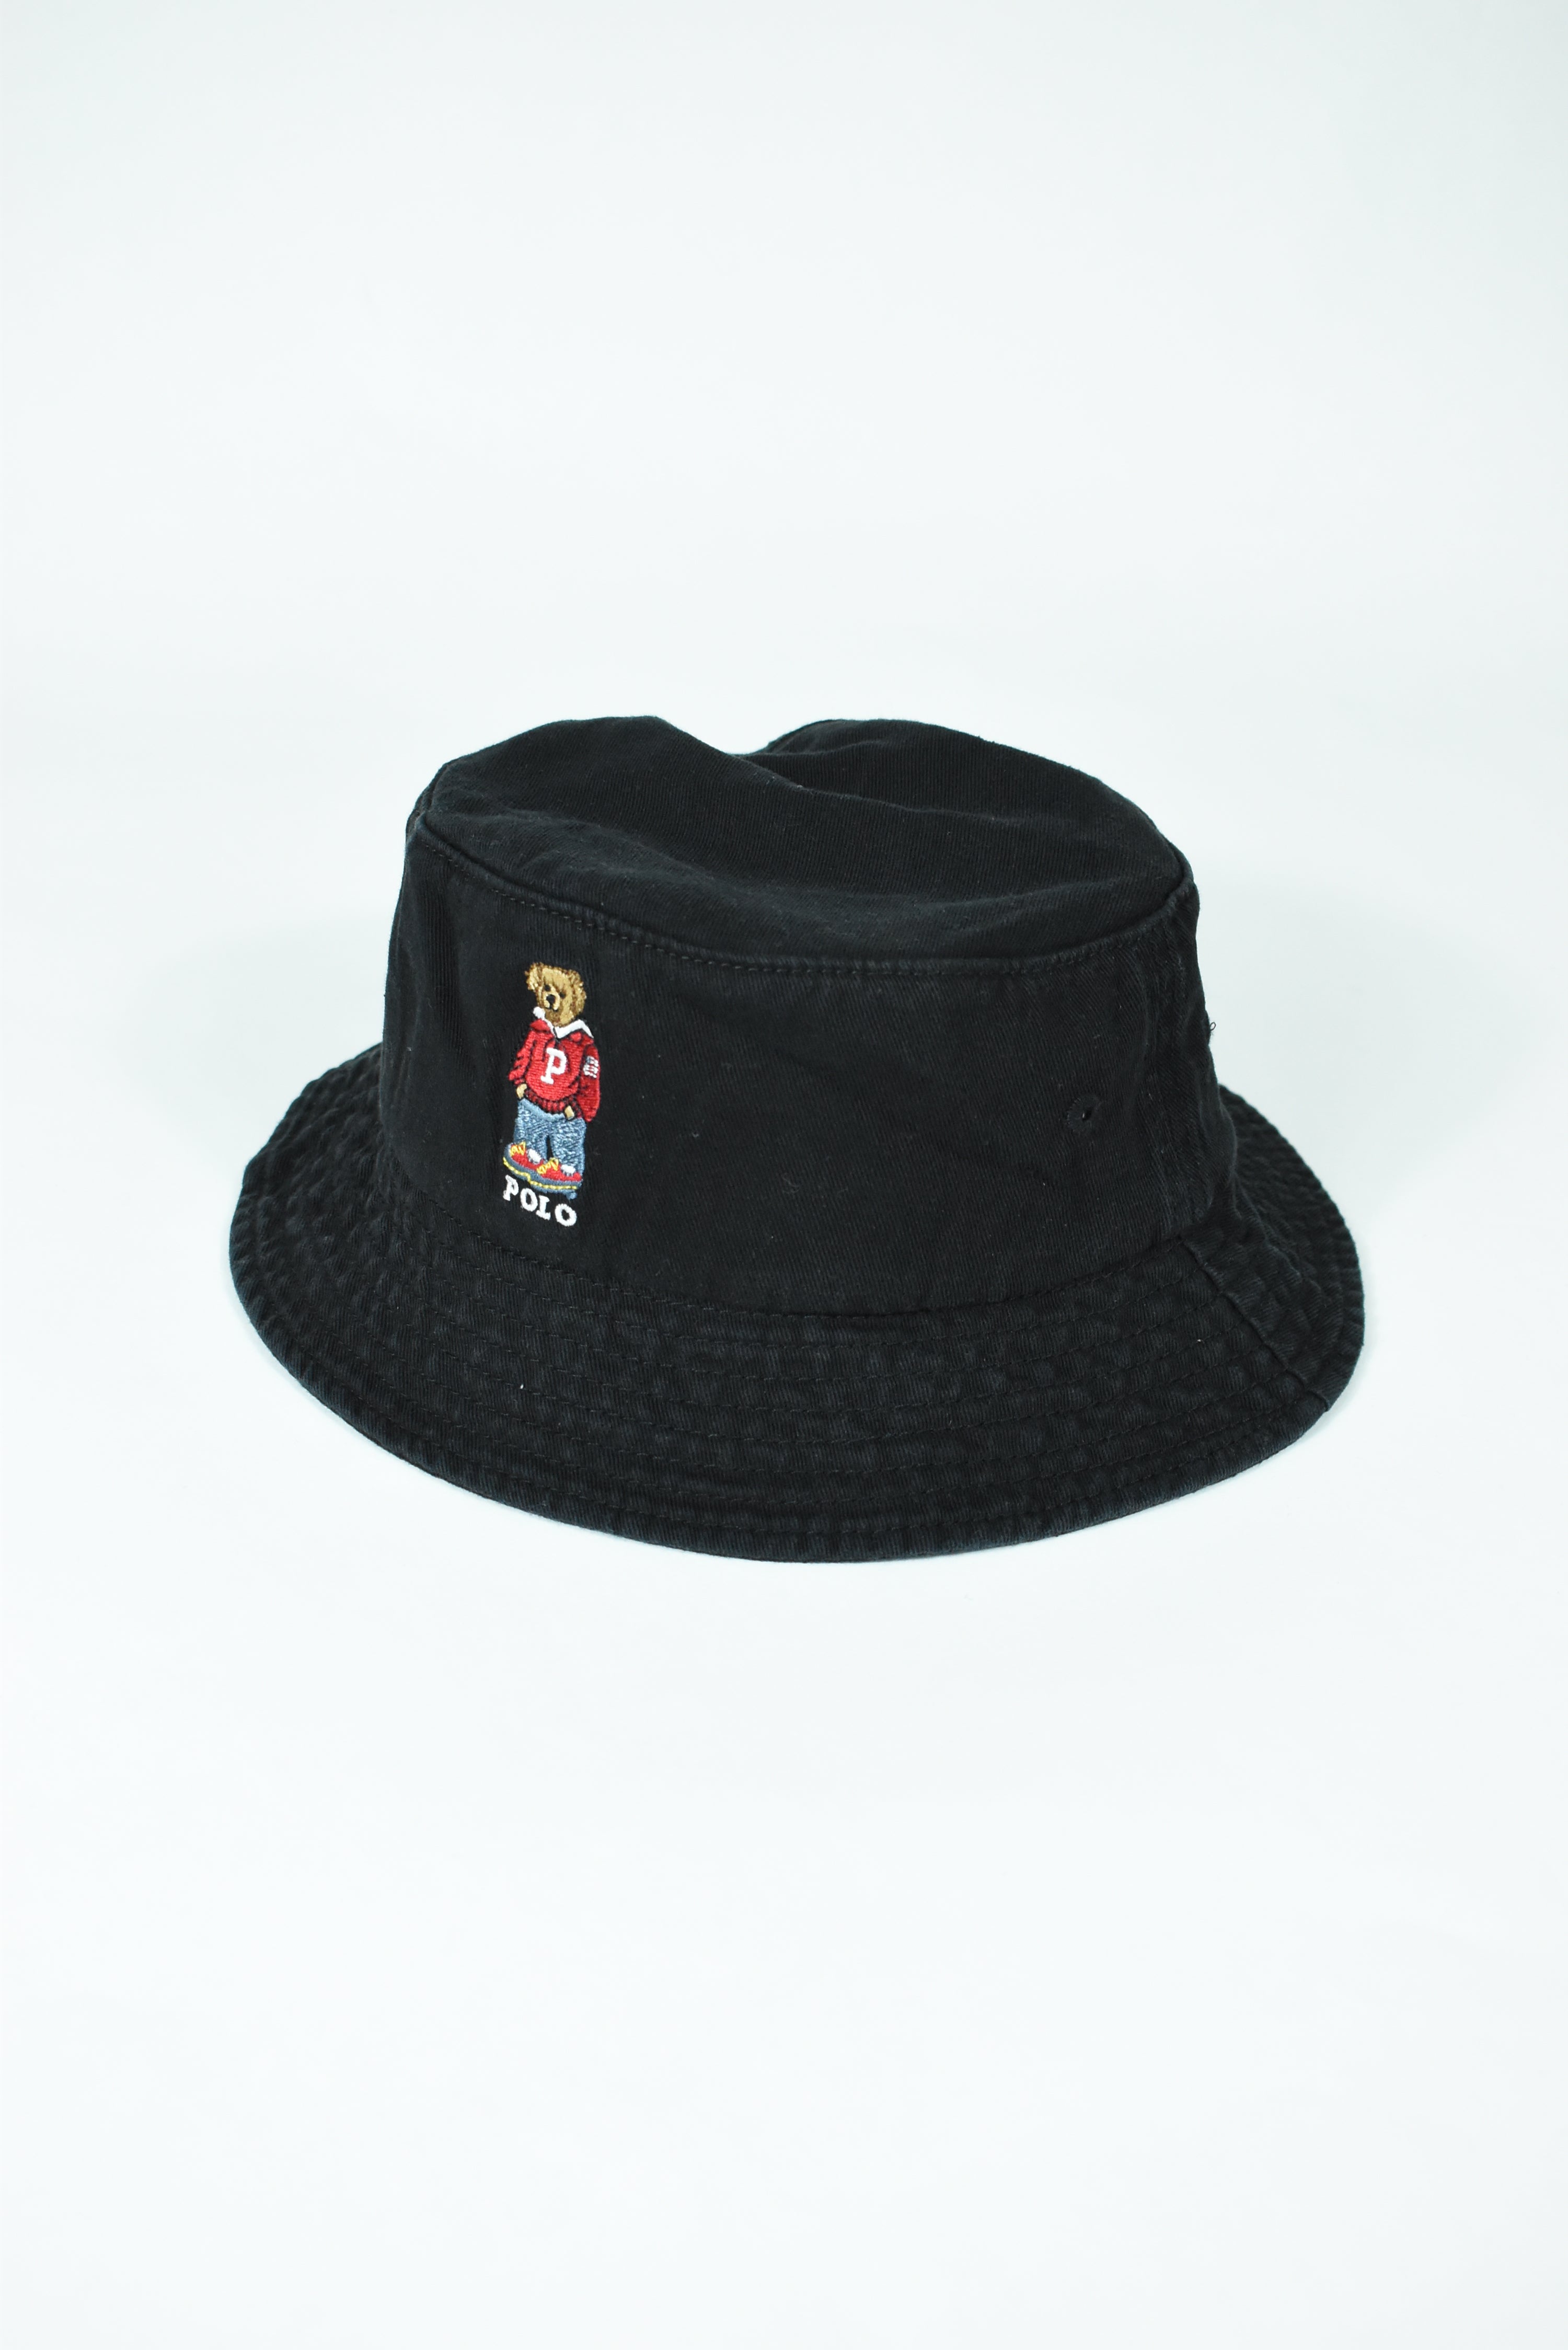 New Black RL Polo Bear Embroidery Bucket Hat